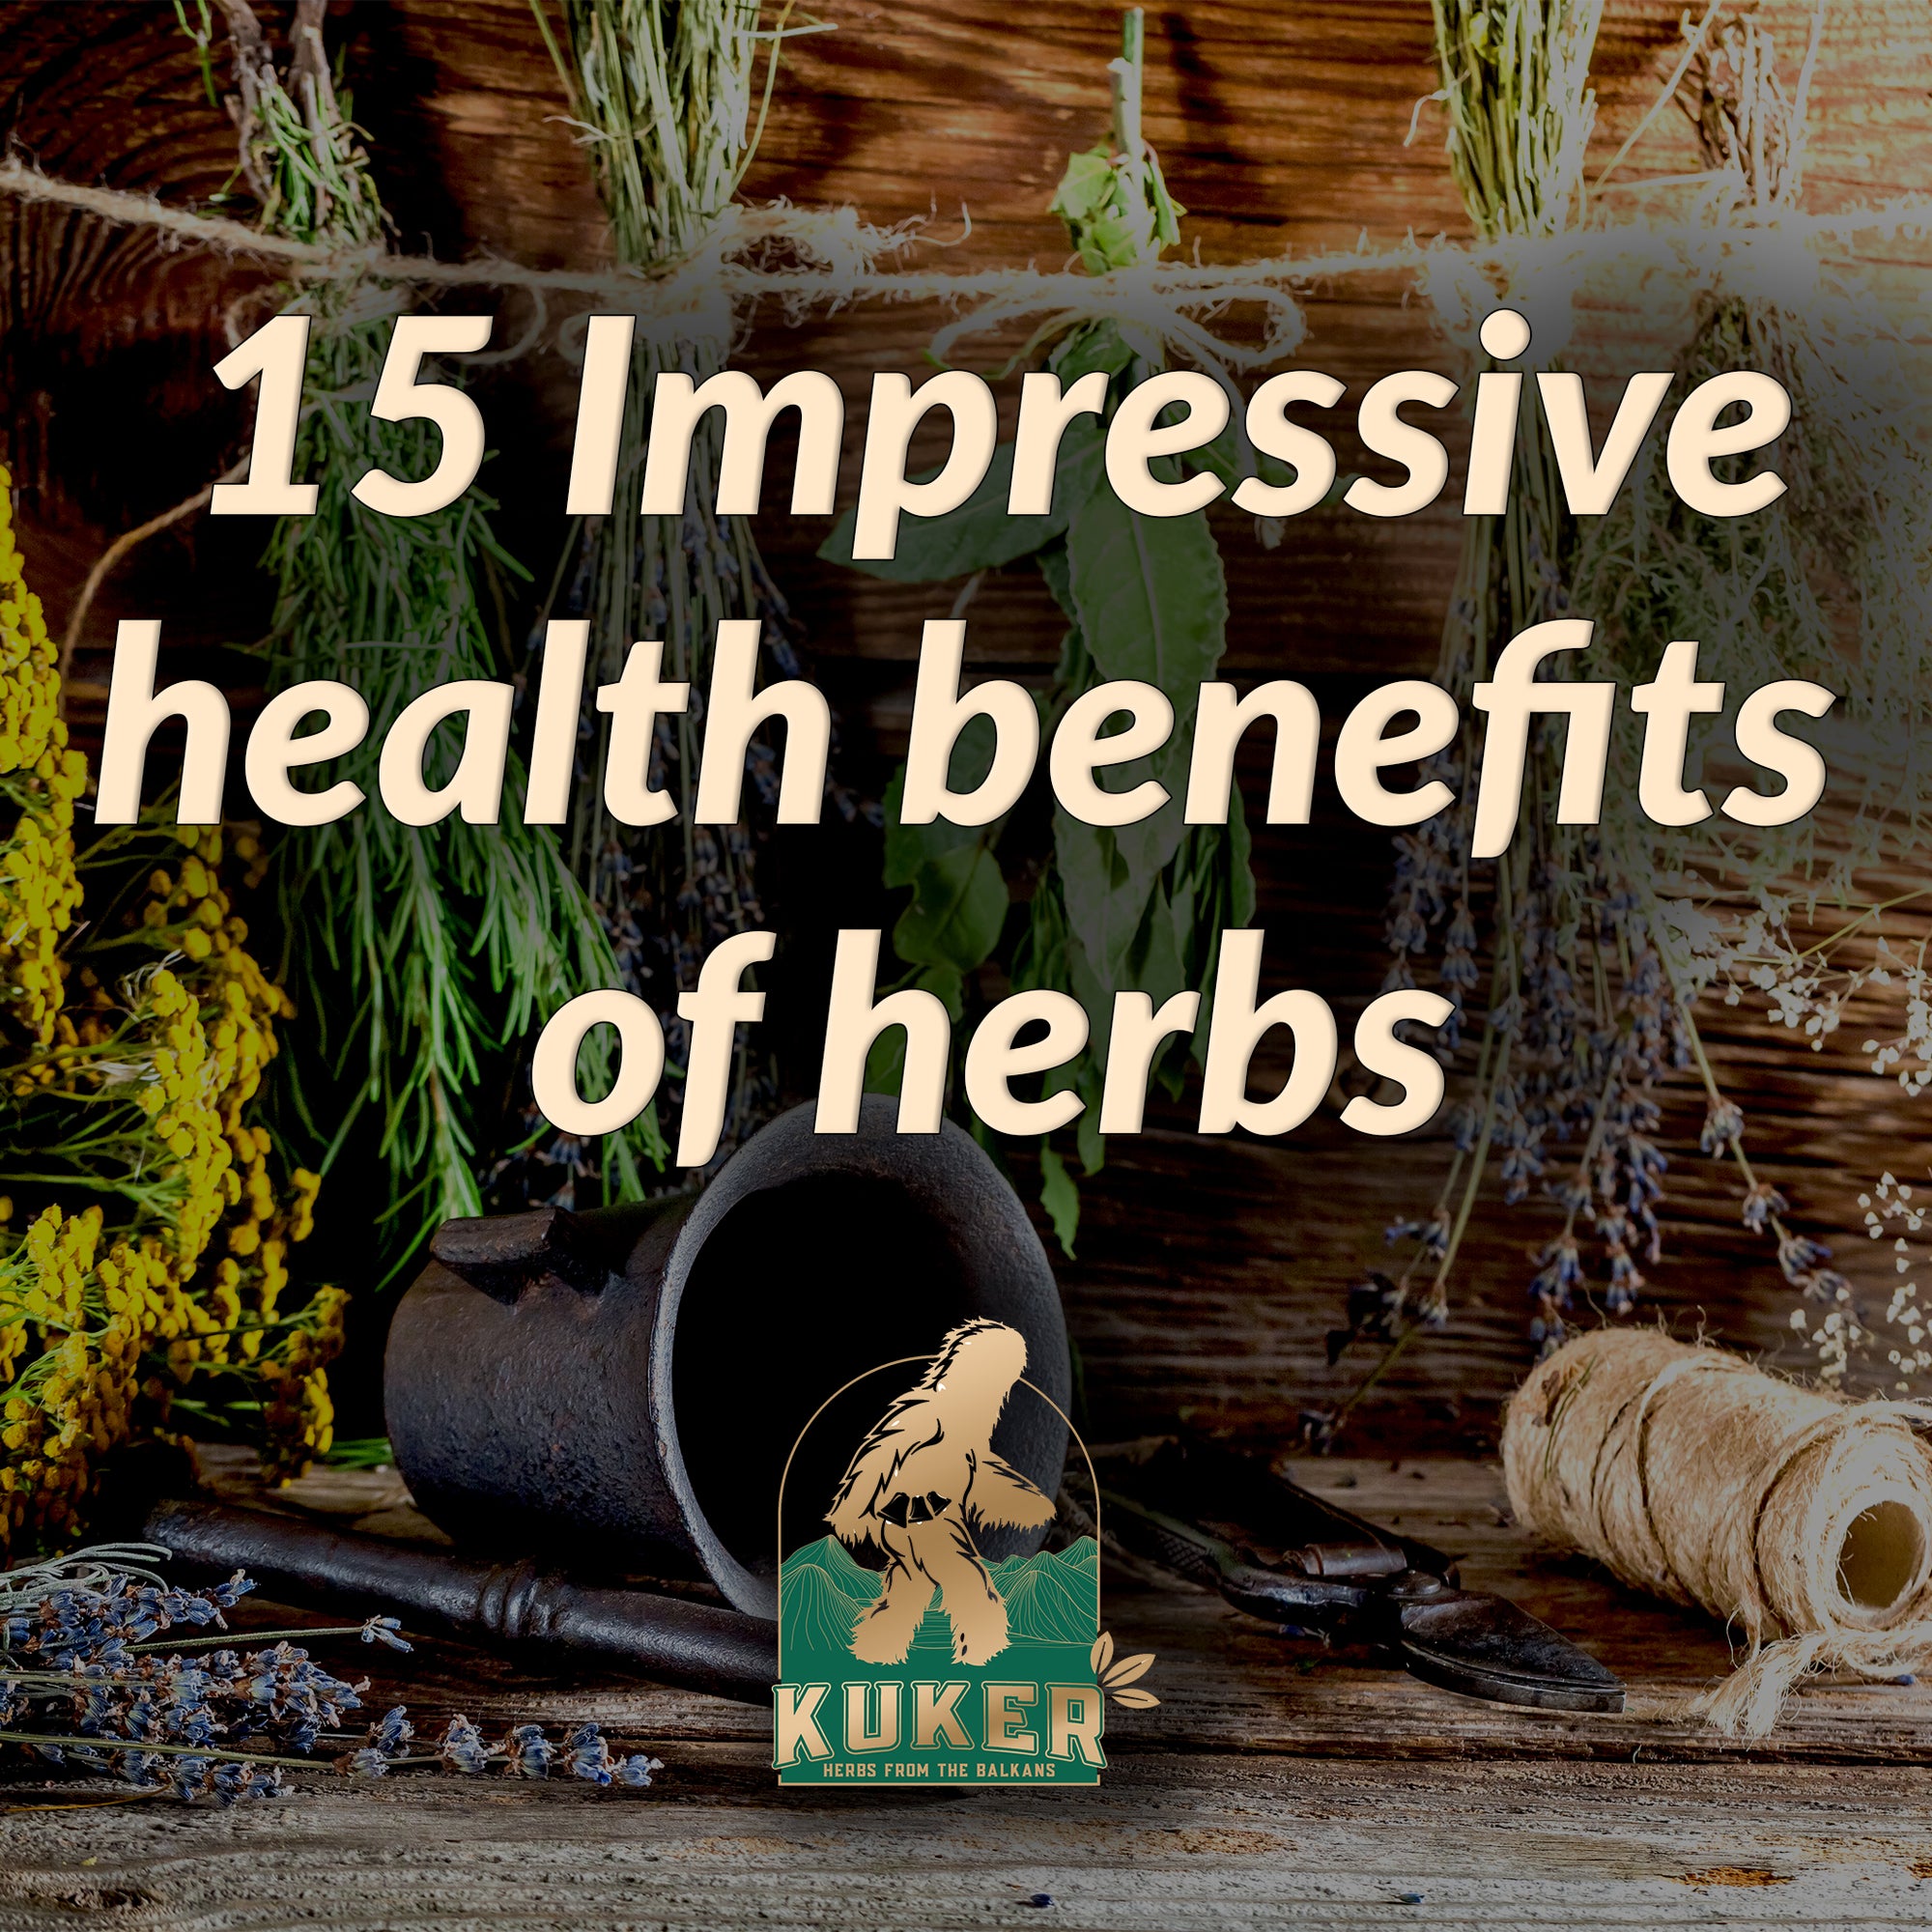 15 Impressive health benefits of Herbs